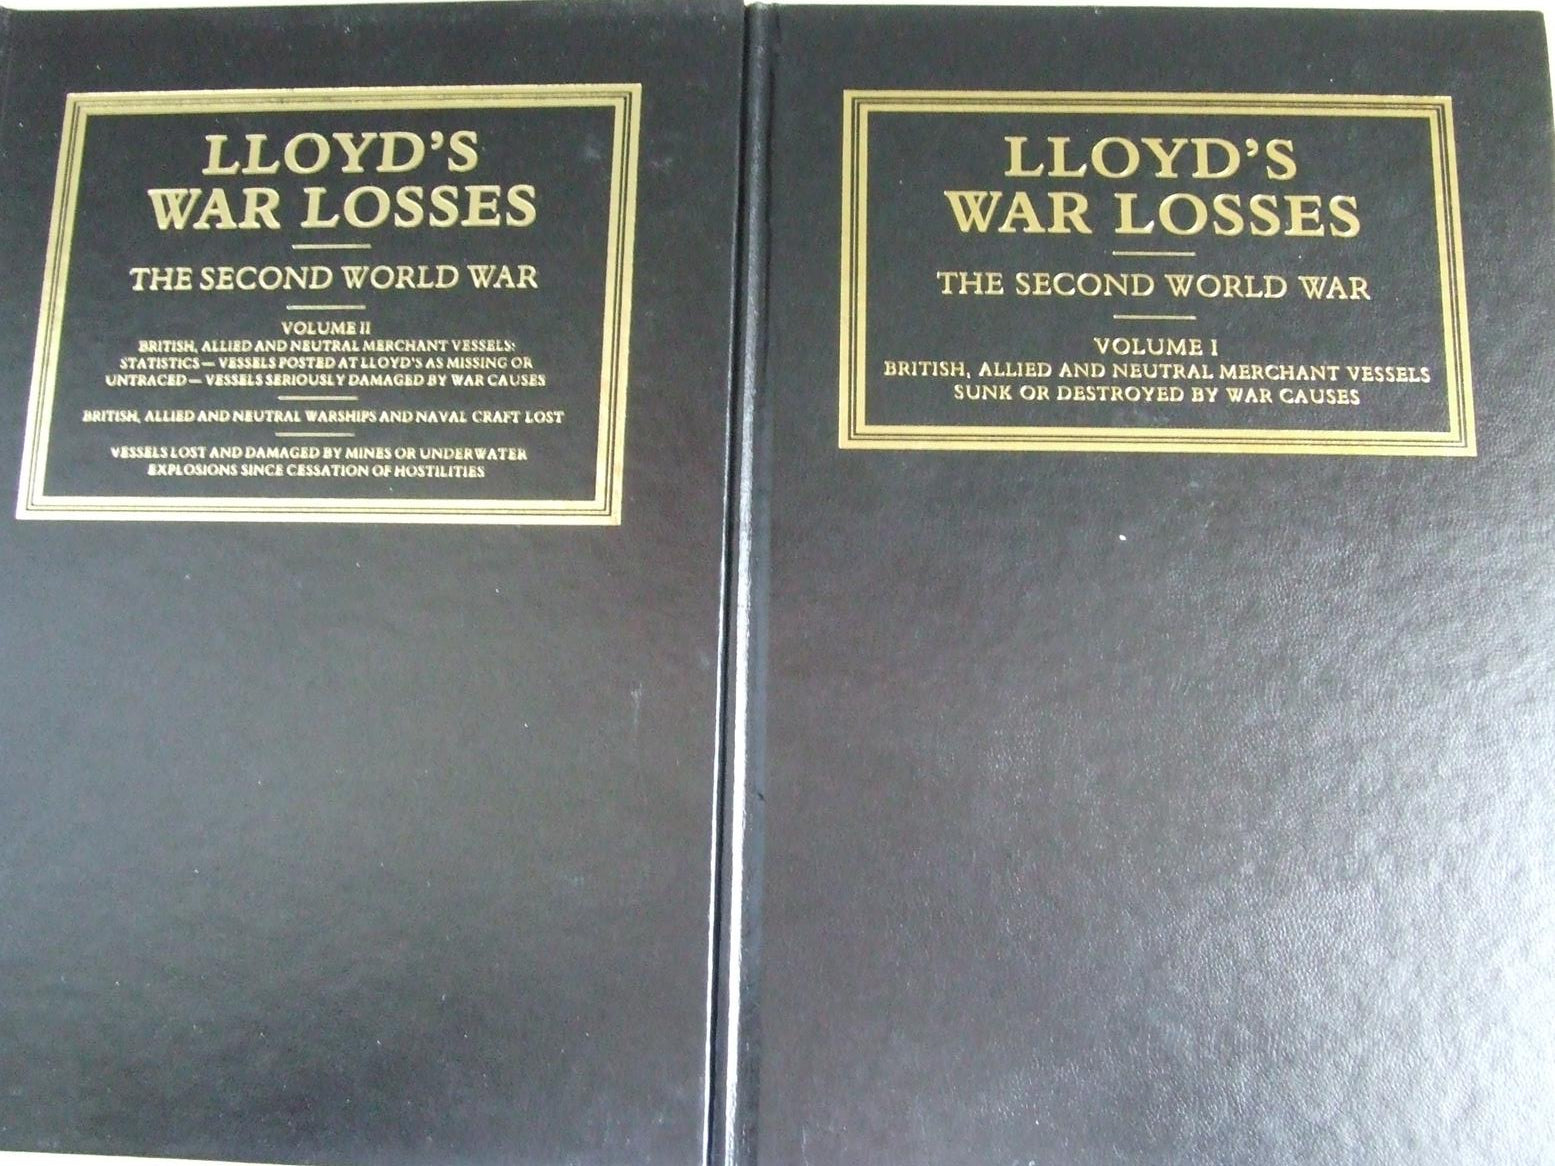 Lloyd's War Losses, The Second World War, 3 September 1939 - 14 August 1945